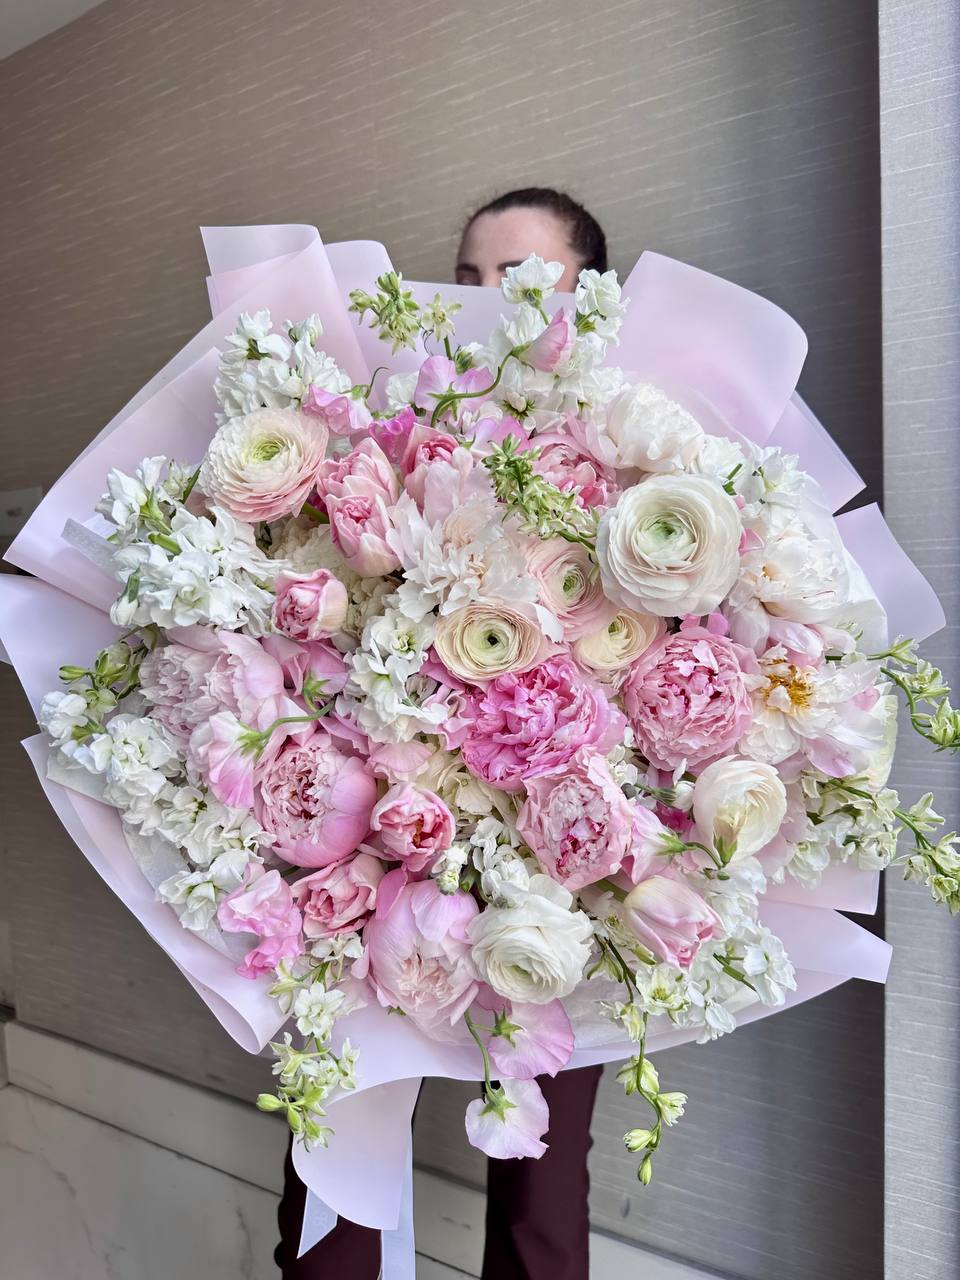 pink peony wedding bouquet, Love letter - Peonies, ranunculus, hydrangea, stock, Dutch tulips